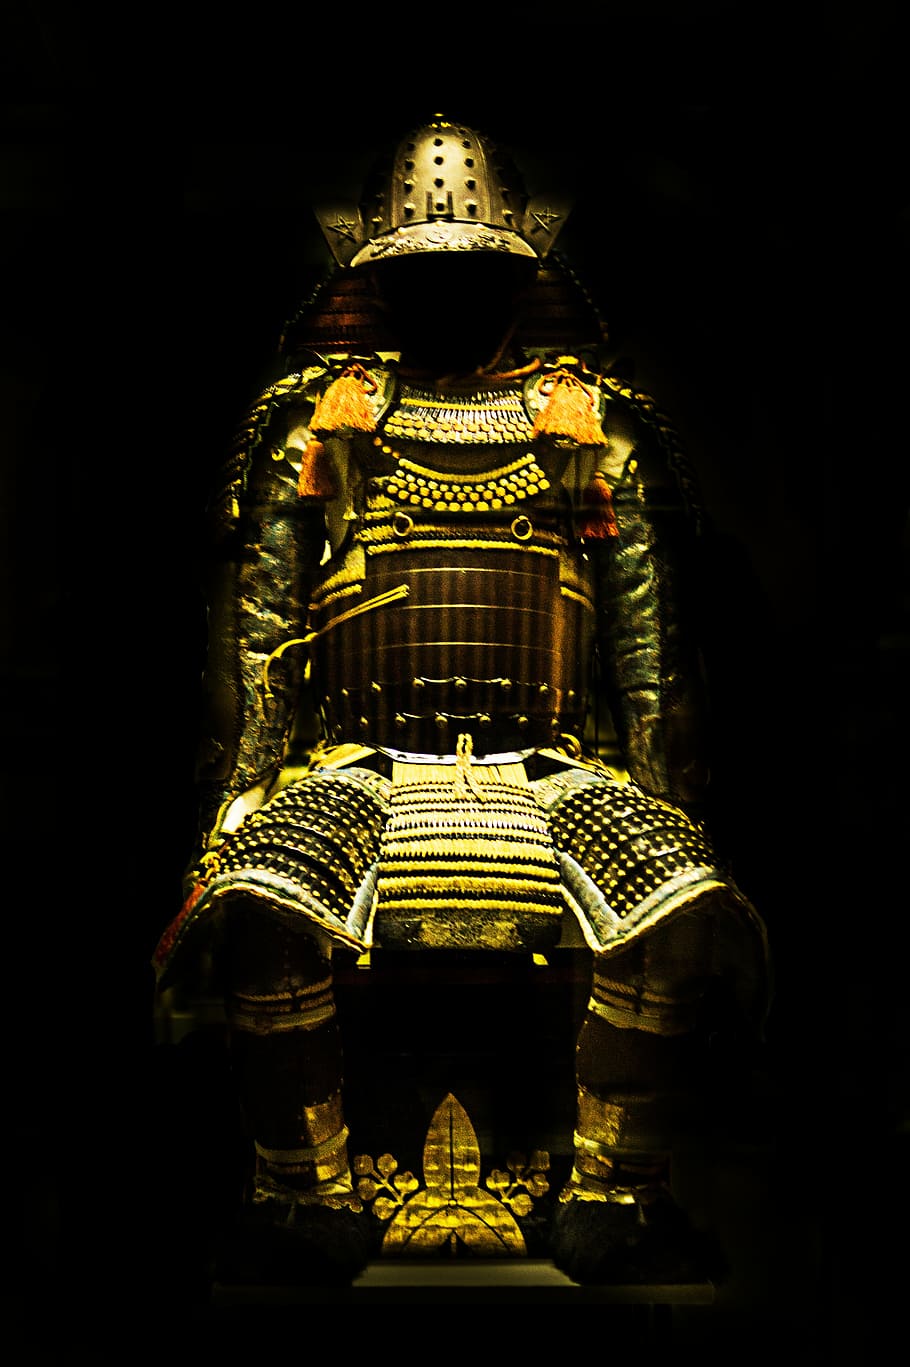 baju besi samurai kuning, ottoman, emas, patung, samurai, baju besi, berwarna emas, tidak ada orang, di dalam ruangan, arsitektur